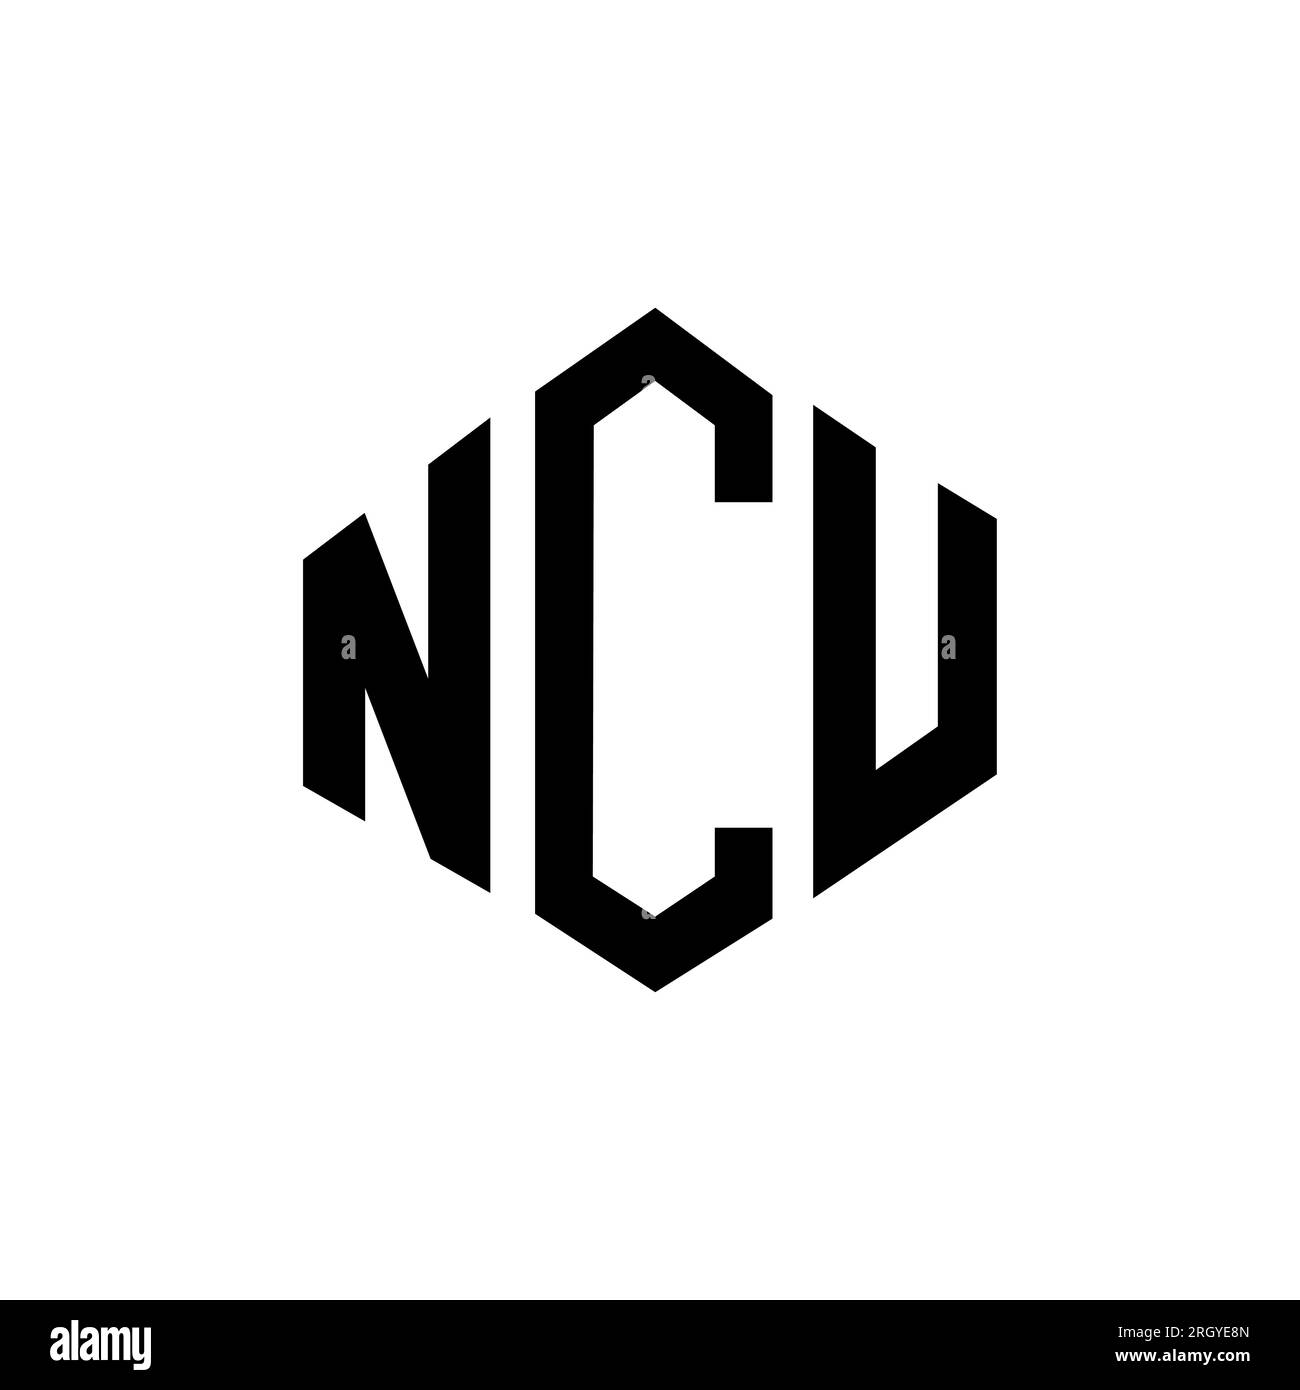 Ncu logo design Black and White Stock Photos & Images - Alamy